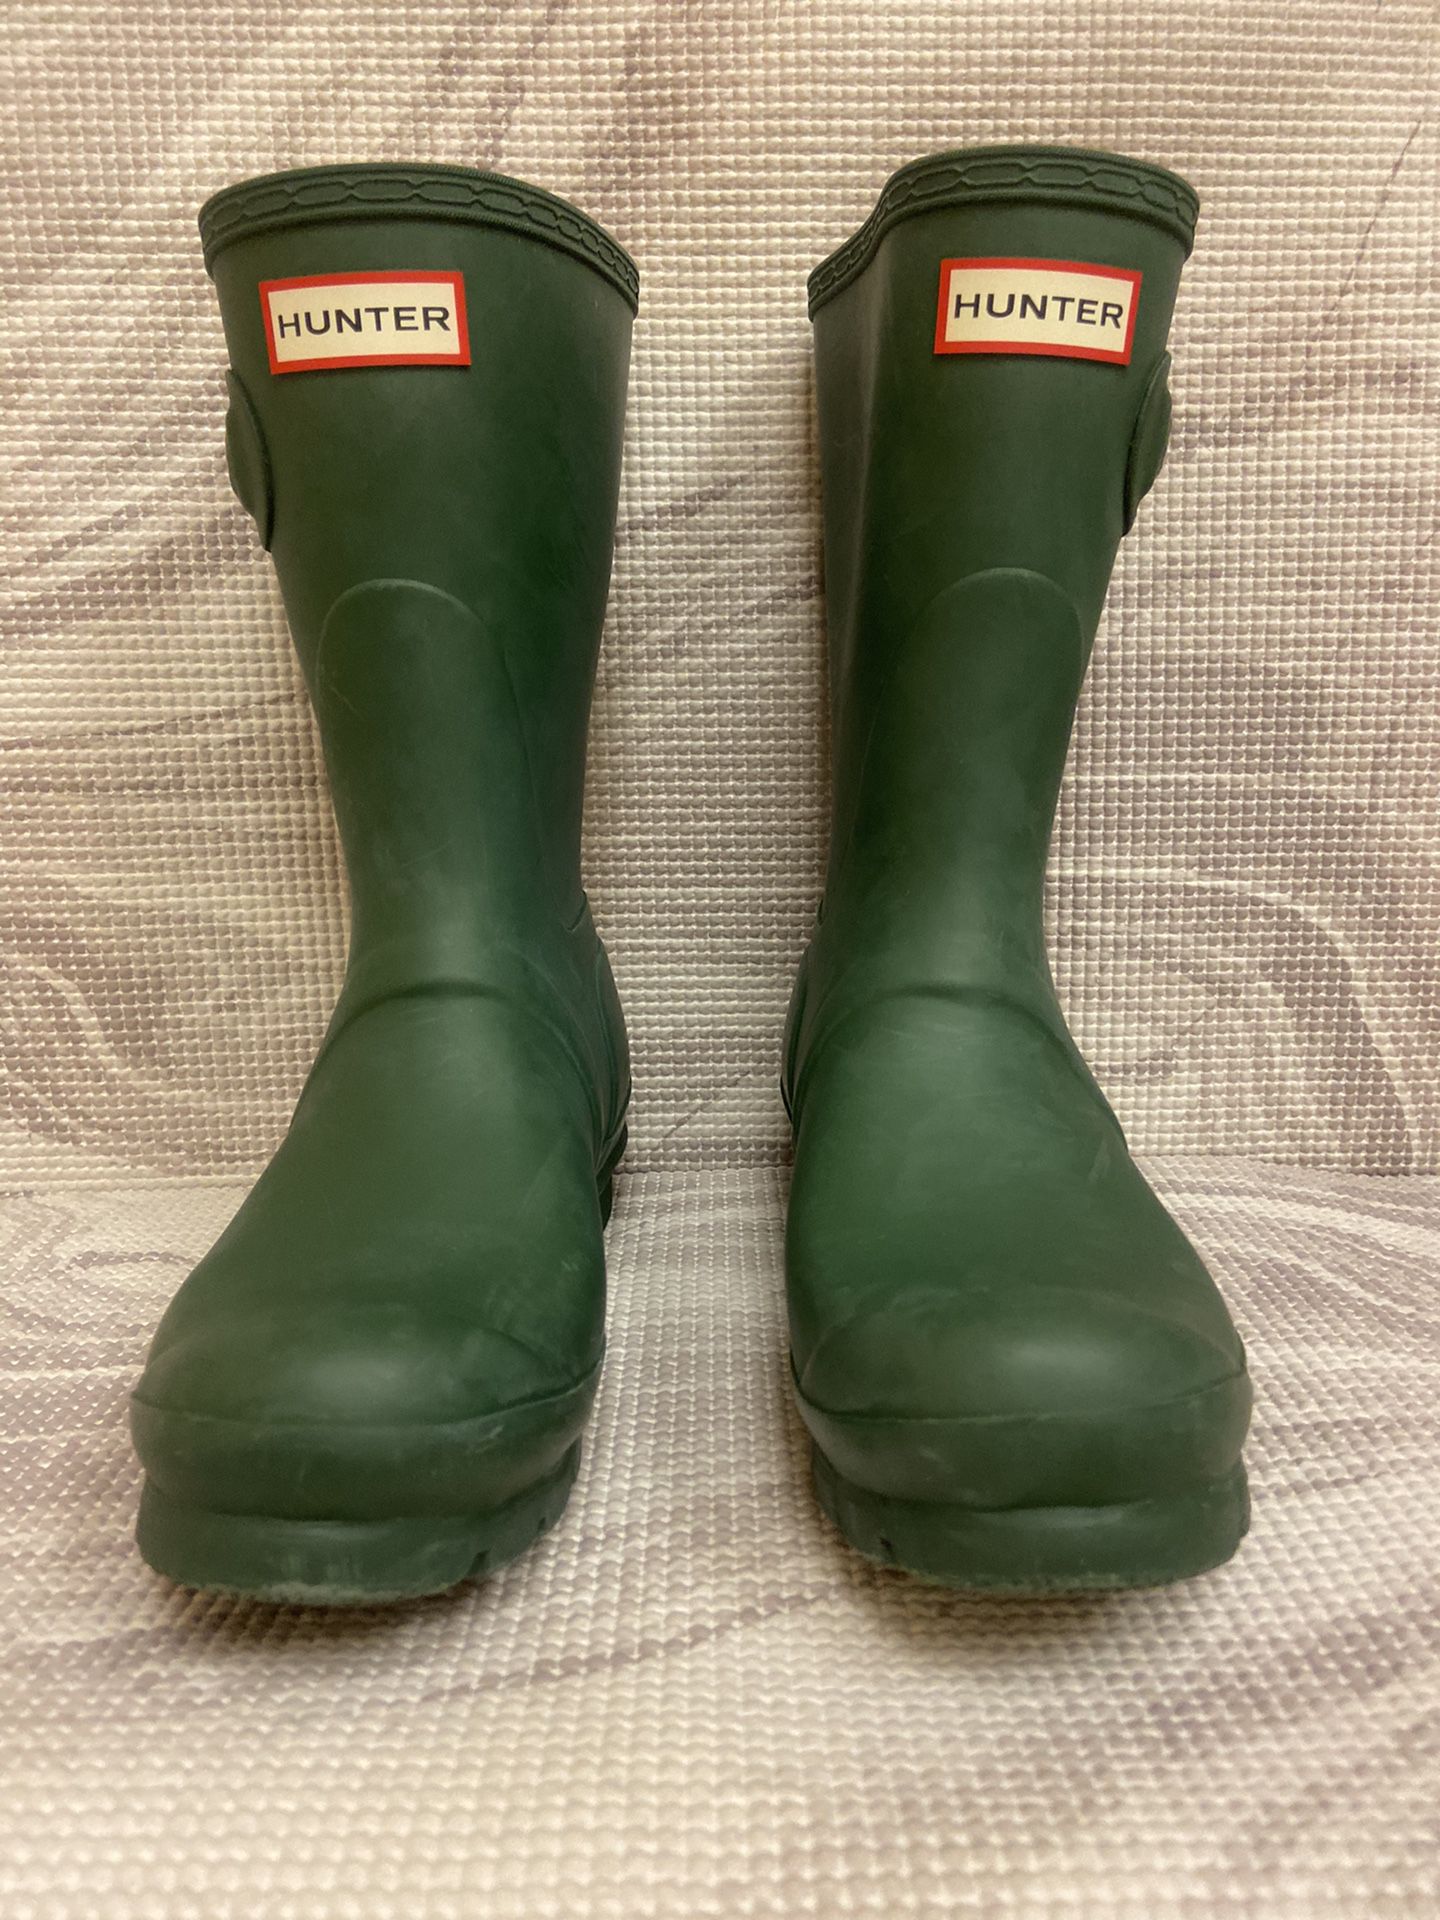 Hunter Ankle rain winter boot size 7